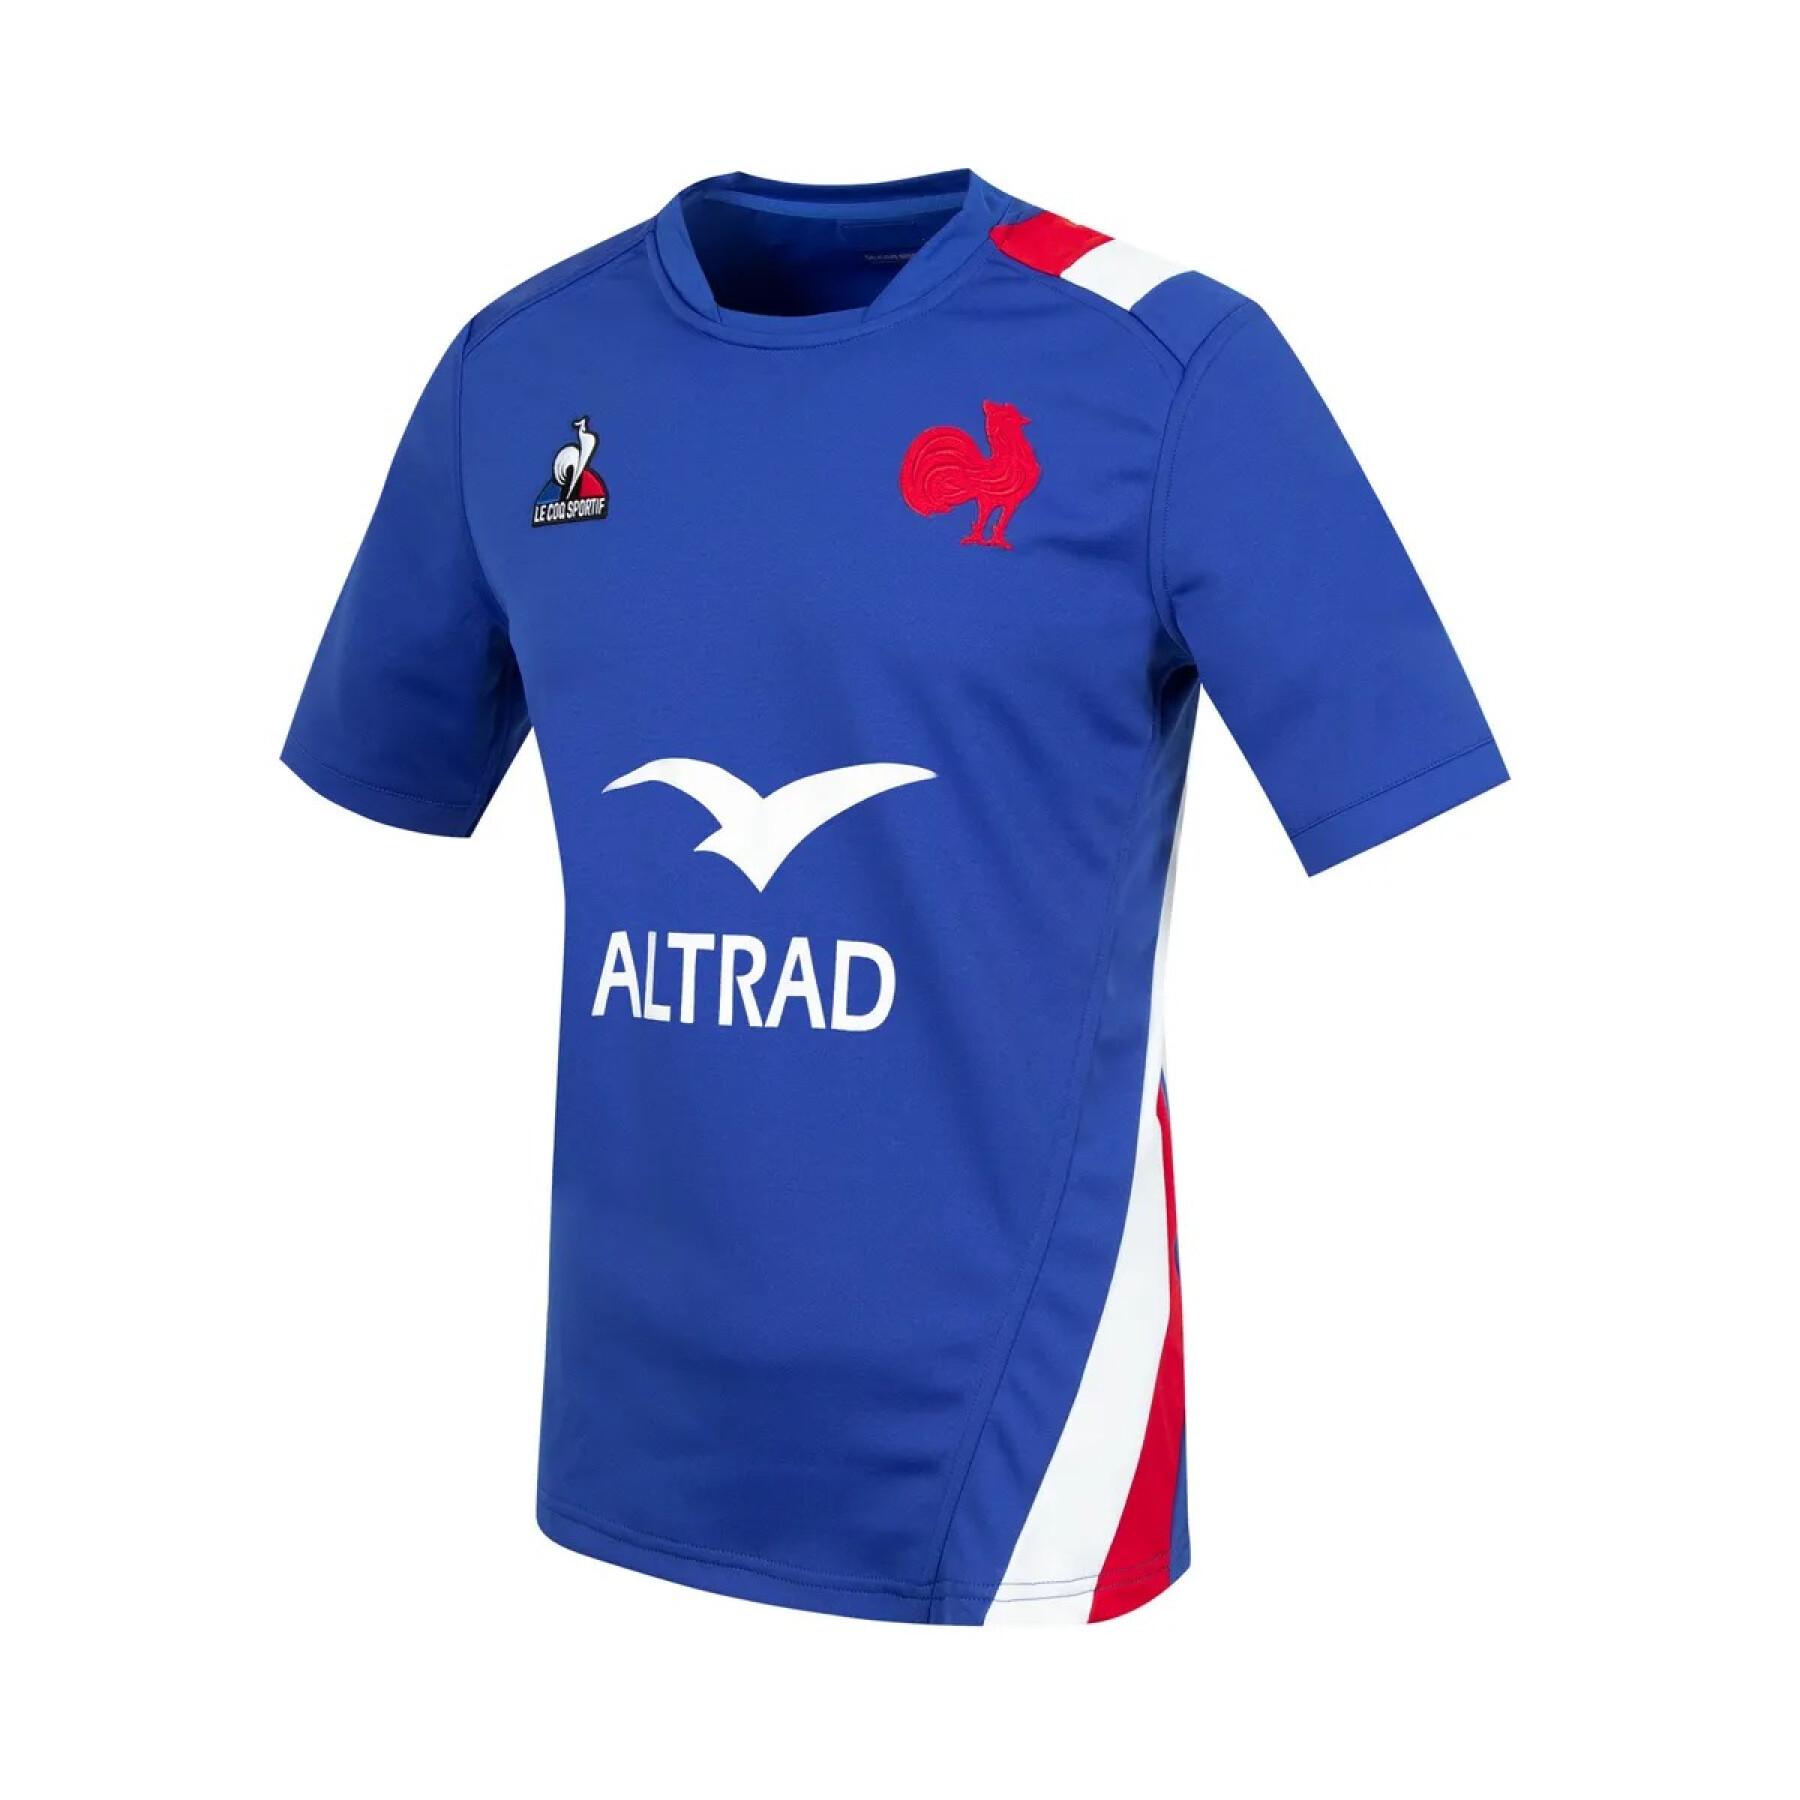 Camiseta home XV de France 2021/22